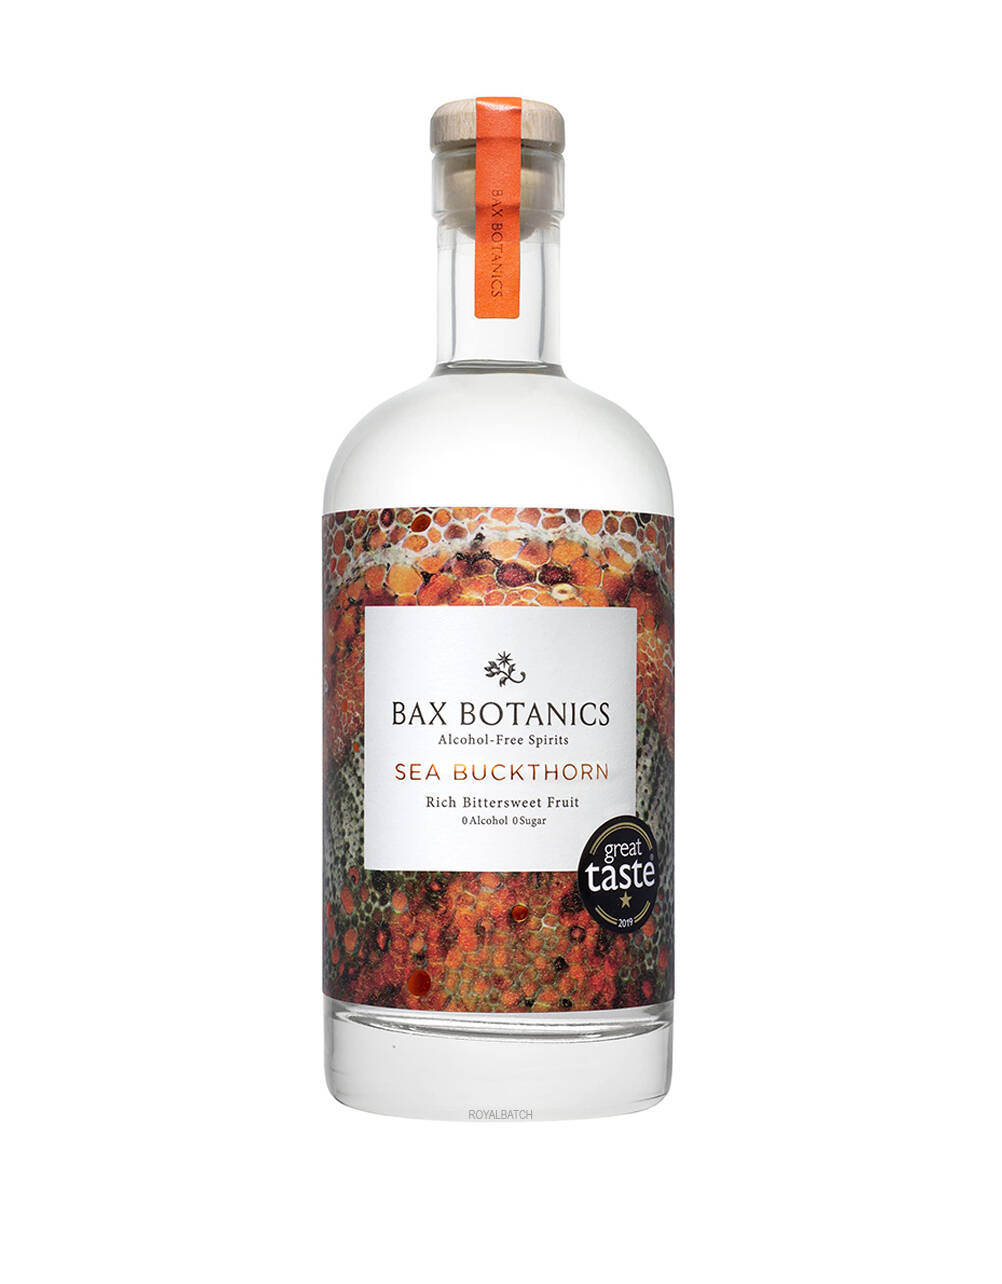 Bax Botanics Sea Buckthorn Alcohol-Free Spirits